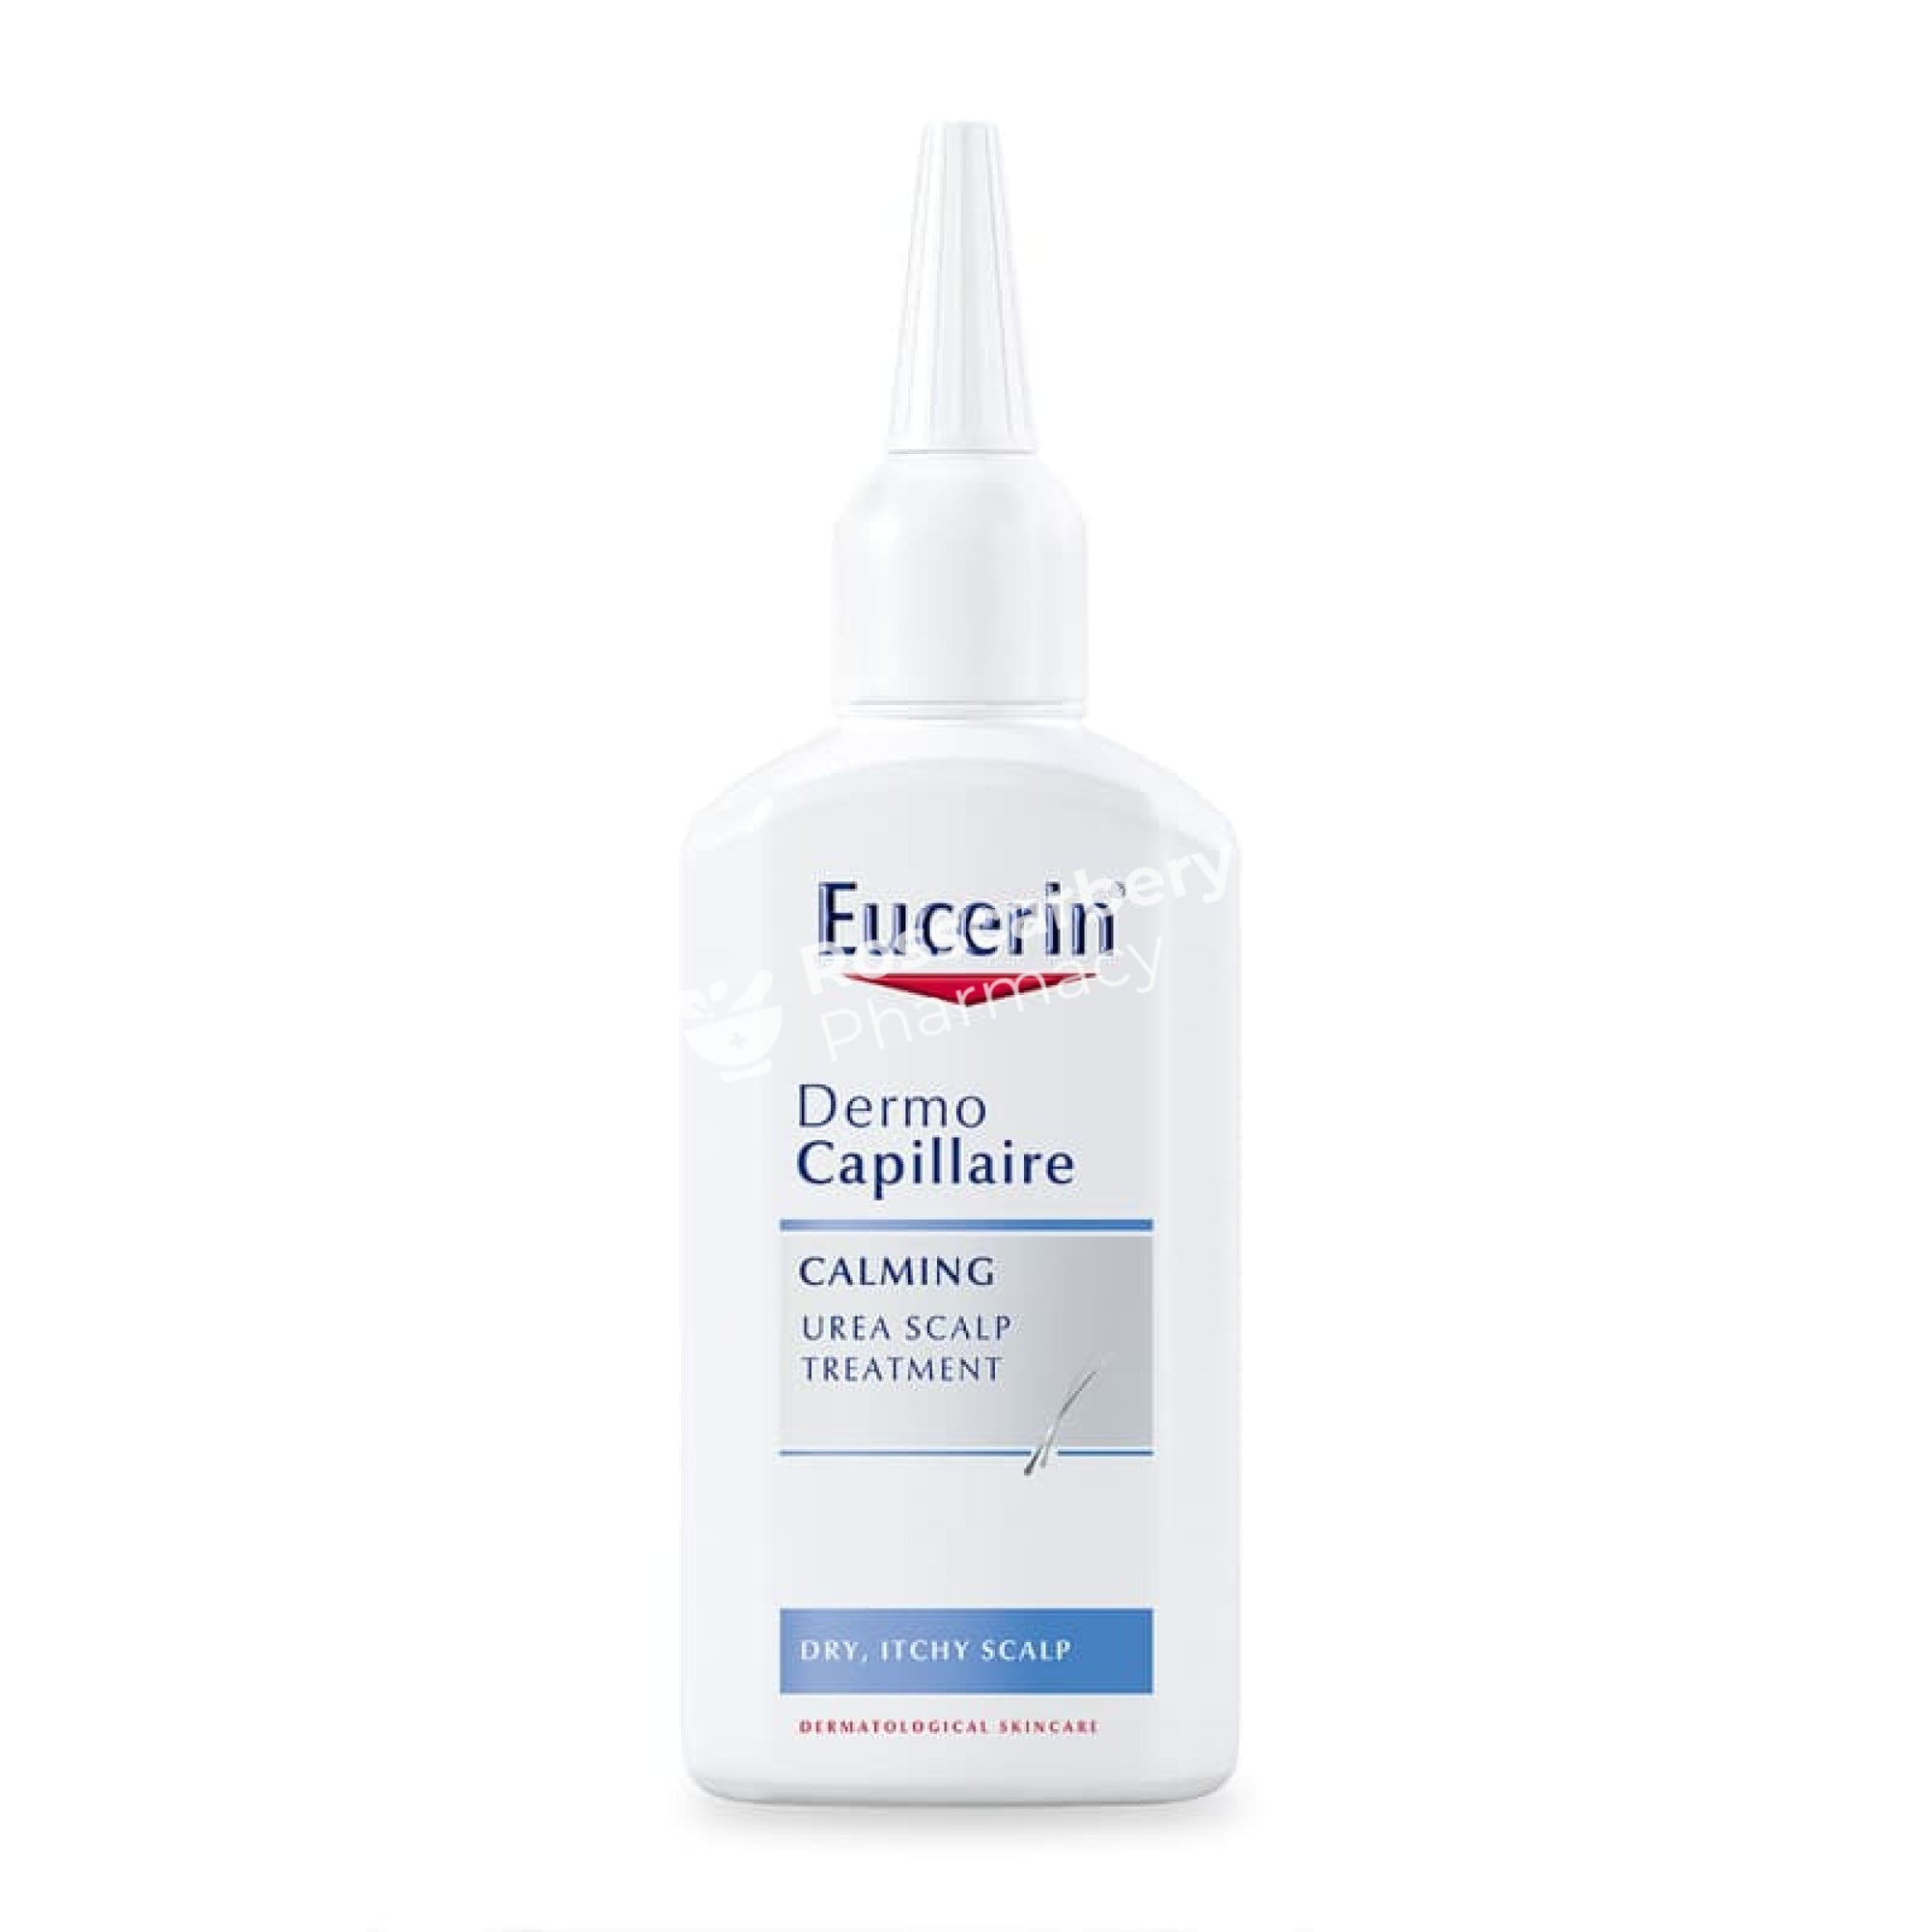 Eucerin Dermo Capillaire Calming 5% Urea Scalp Treatment Hair Masks/treatment